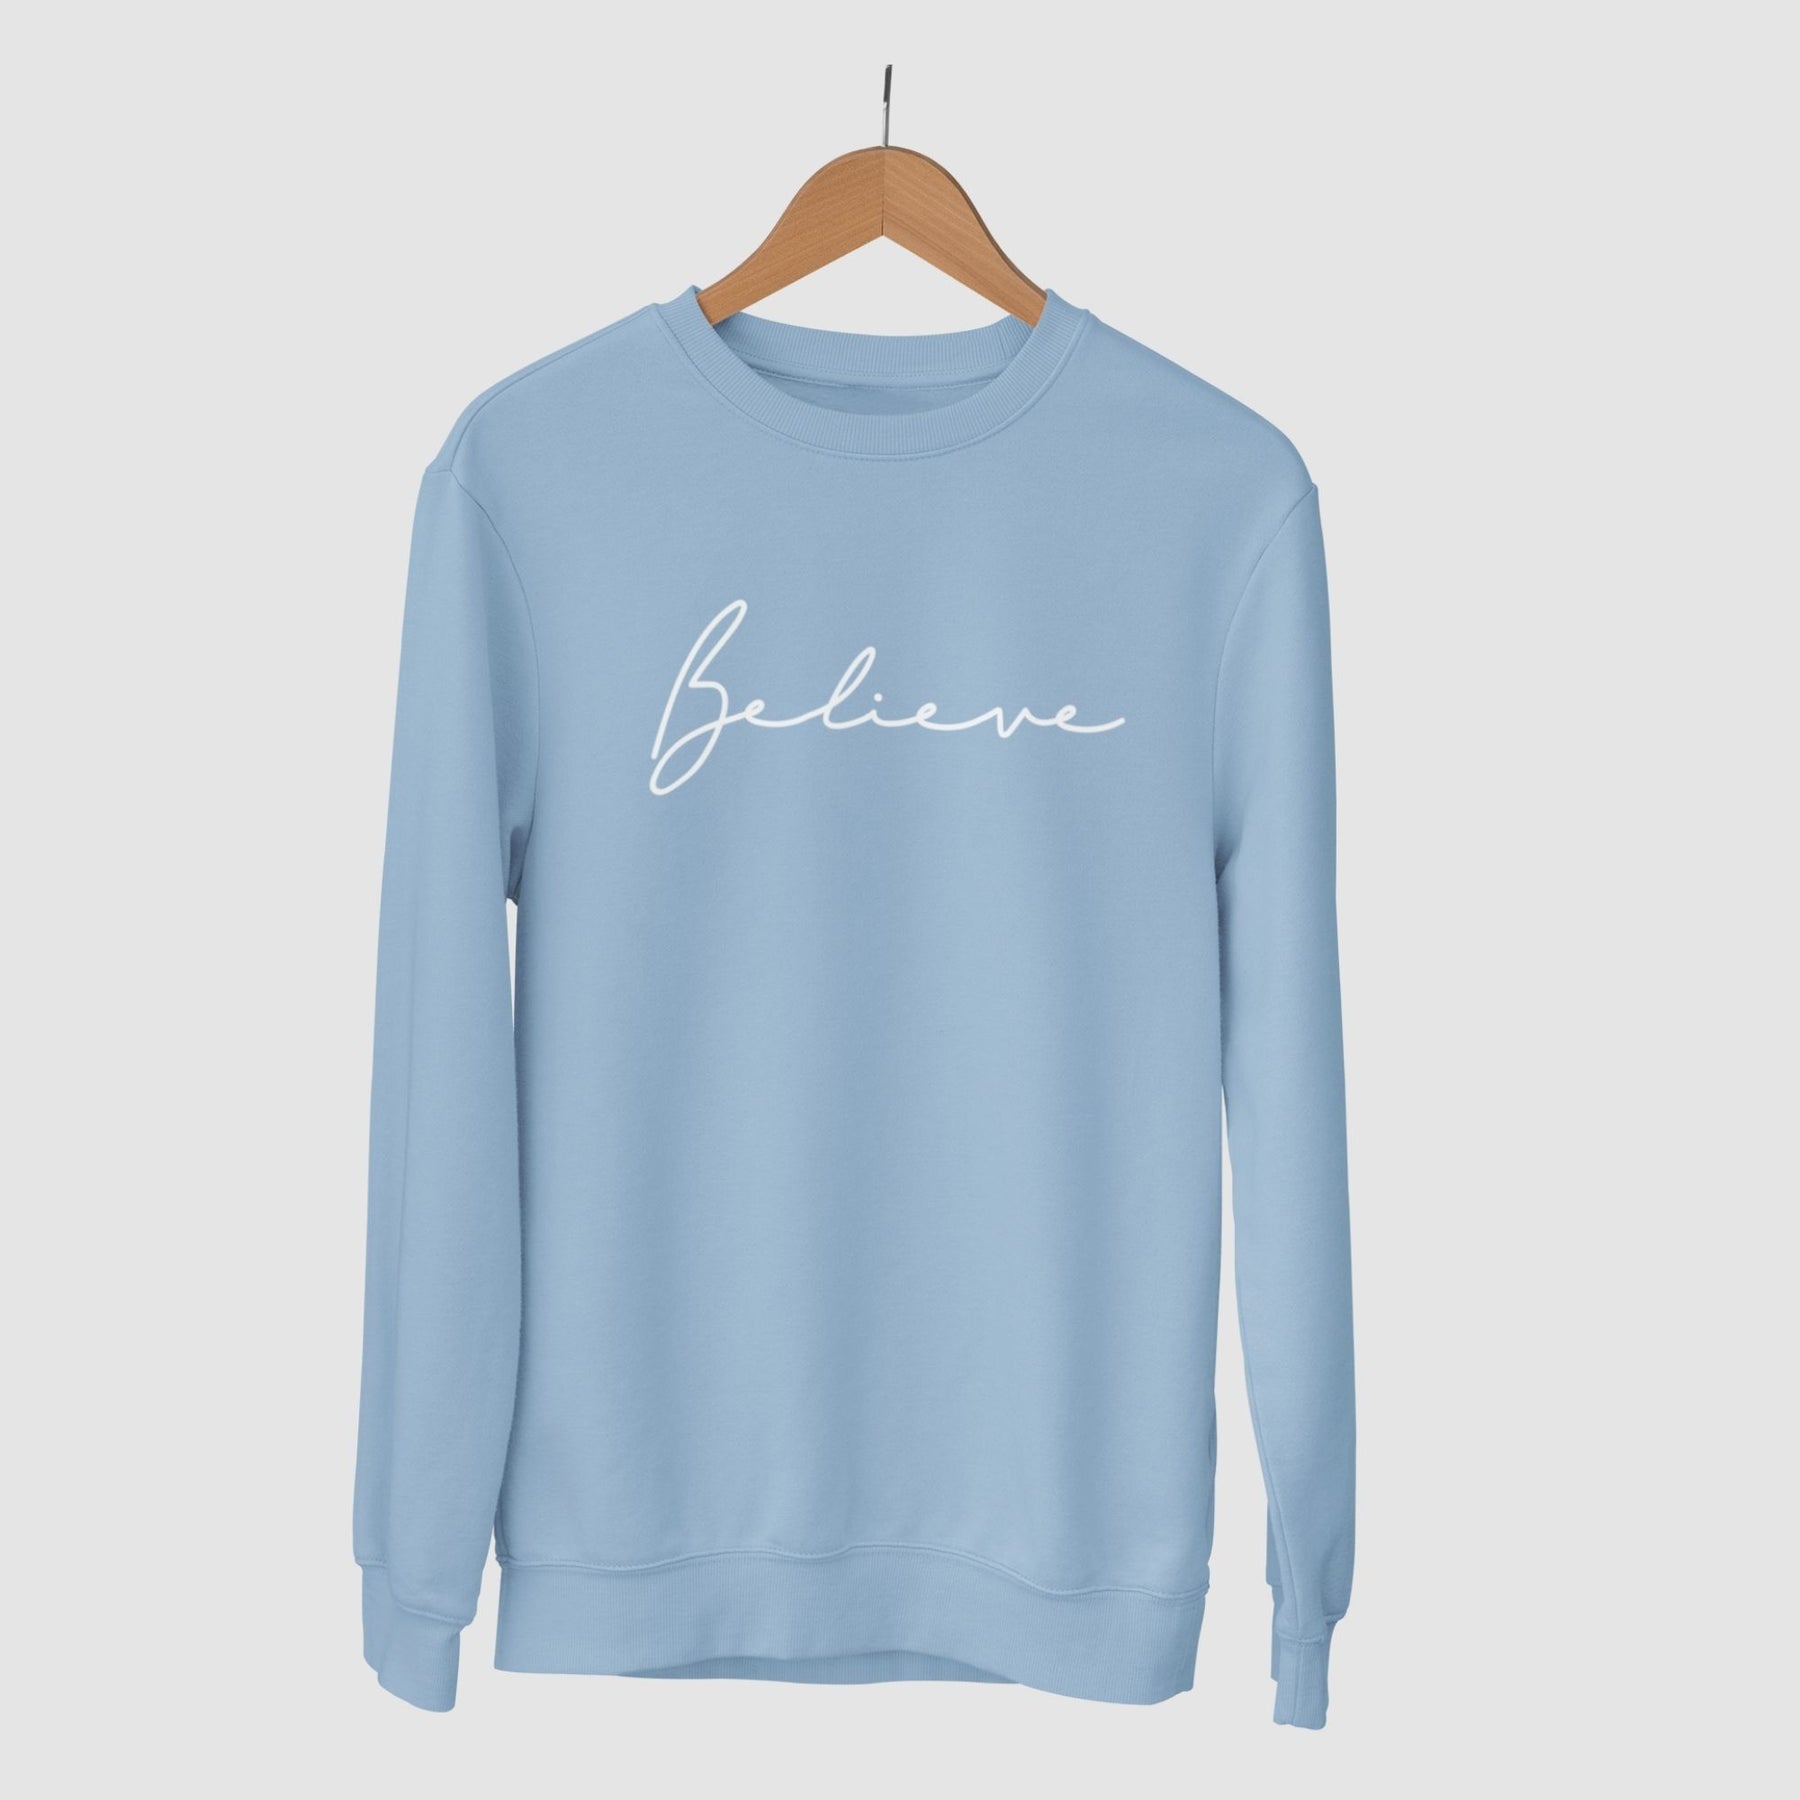 believe-cotton-printed-unisex-light-blue-sweatshirt-gogirgit-com